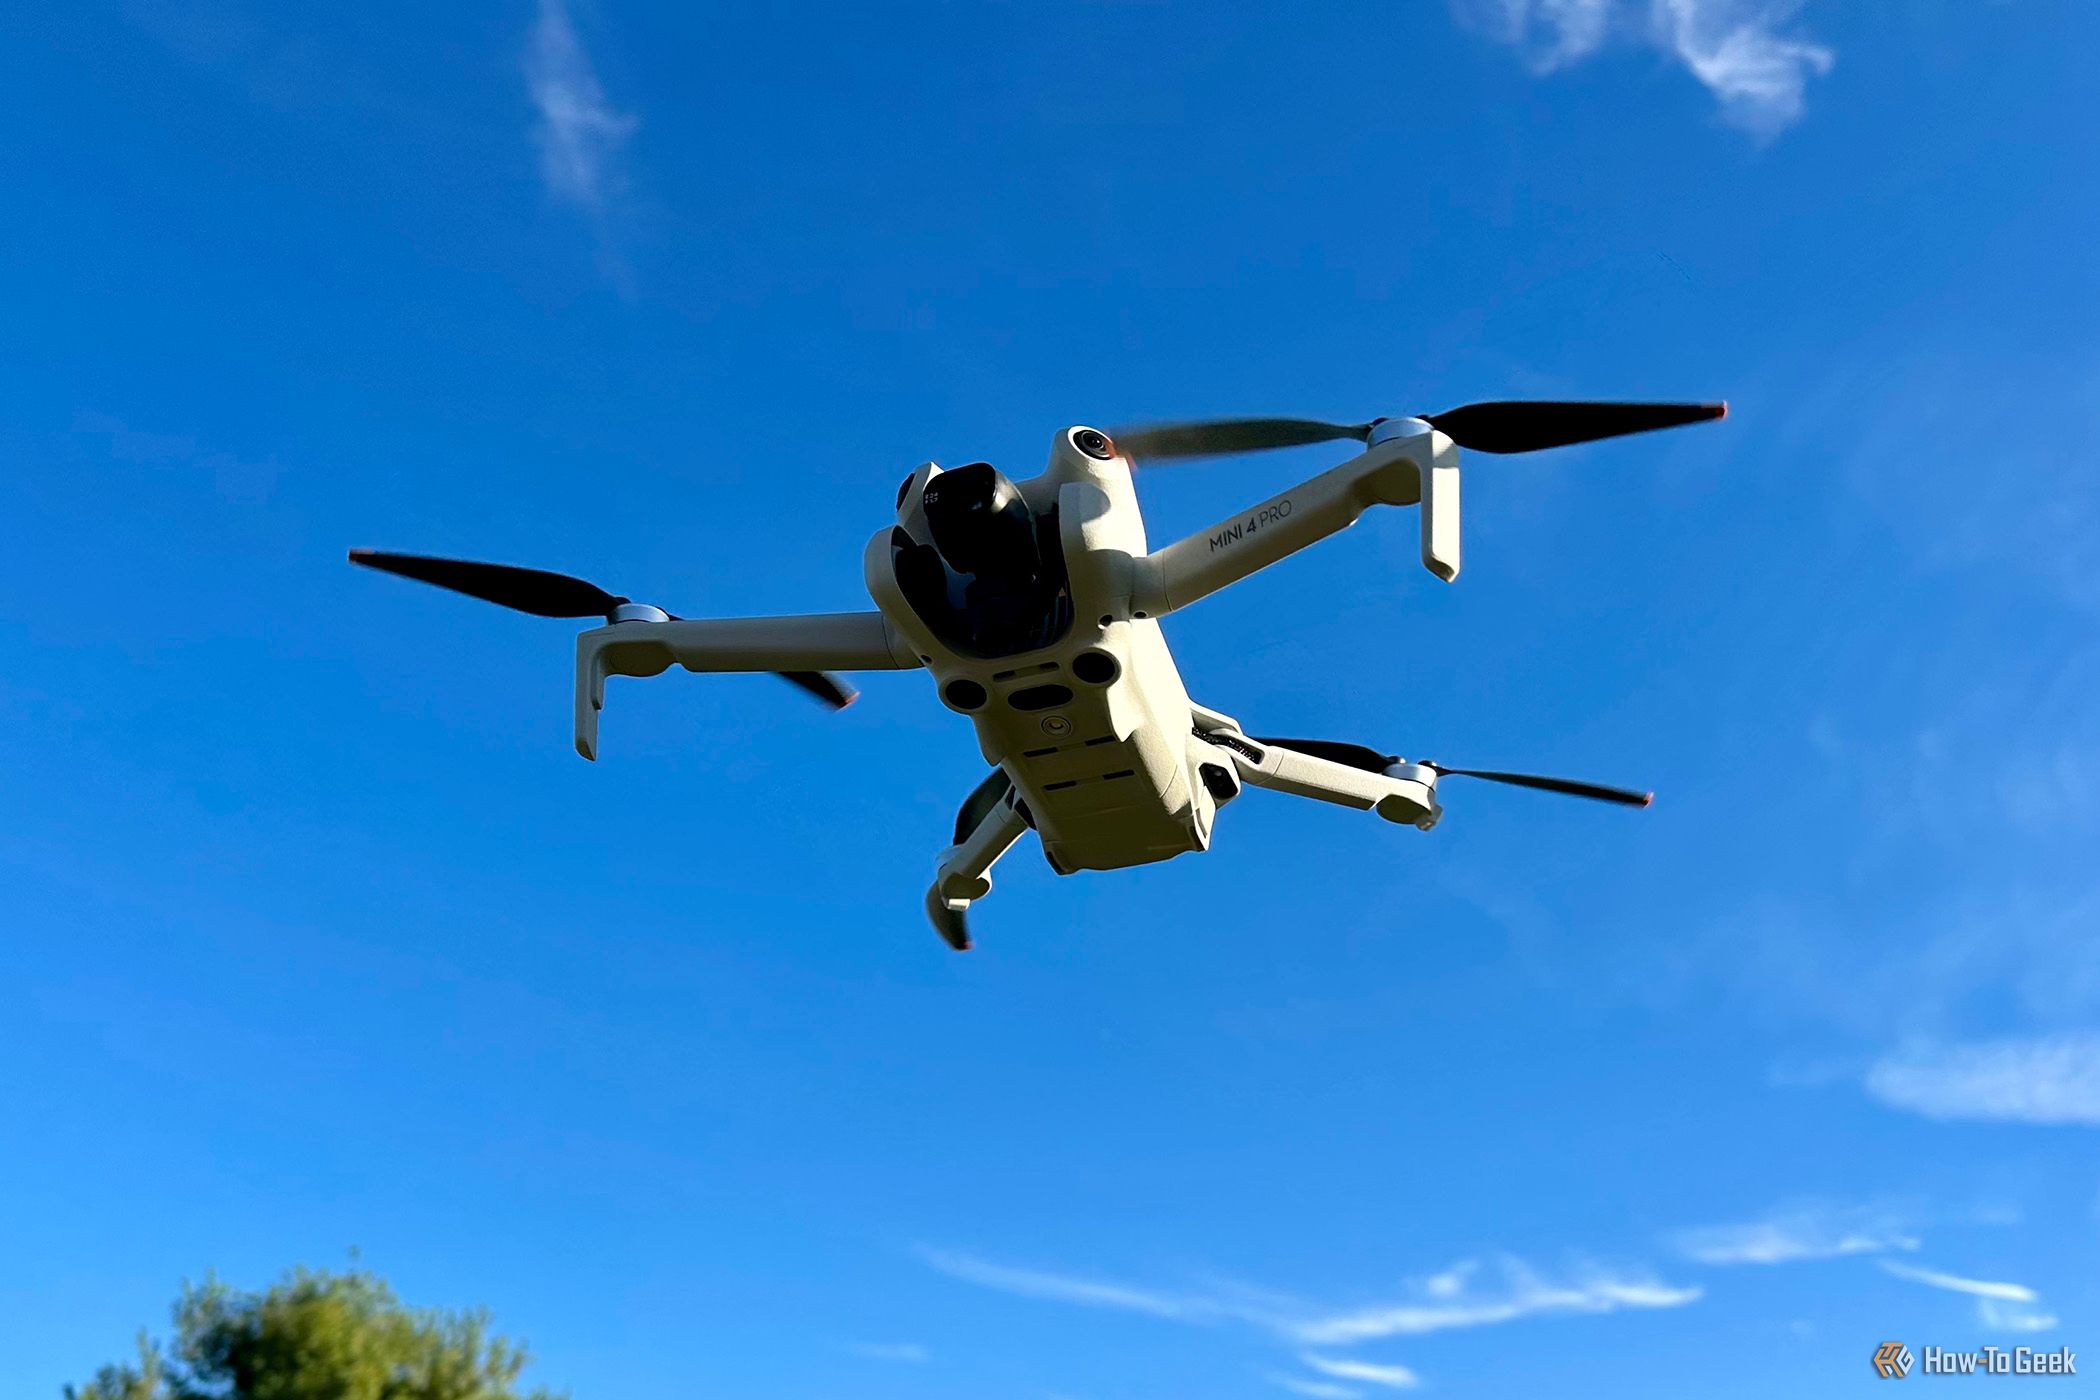 DJI Mini 4 Pro shown flying against a blue sky